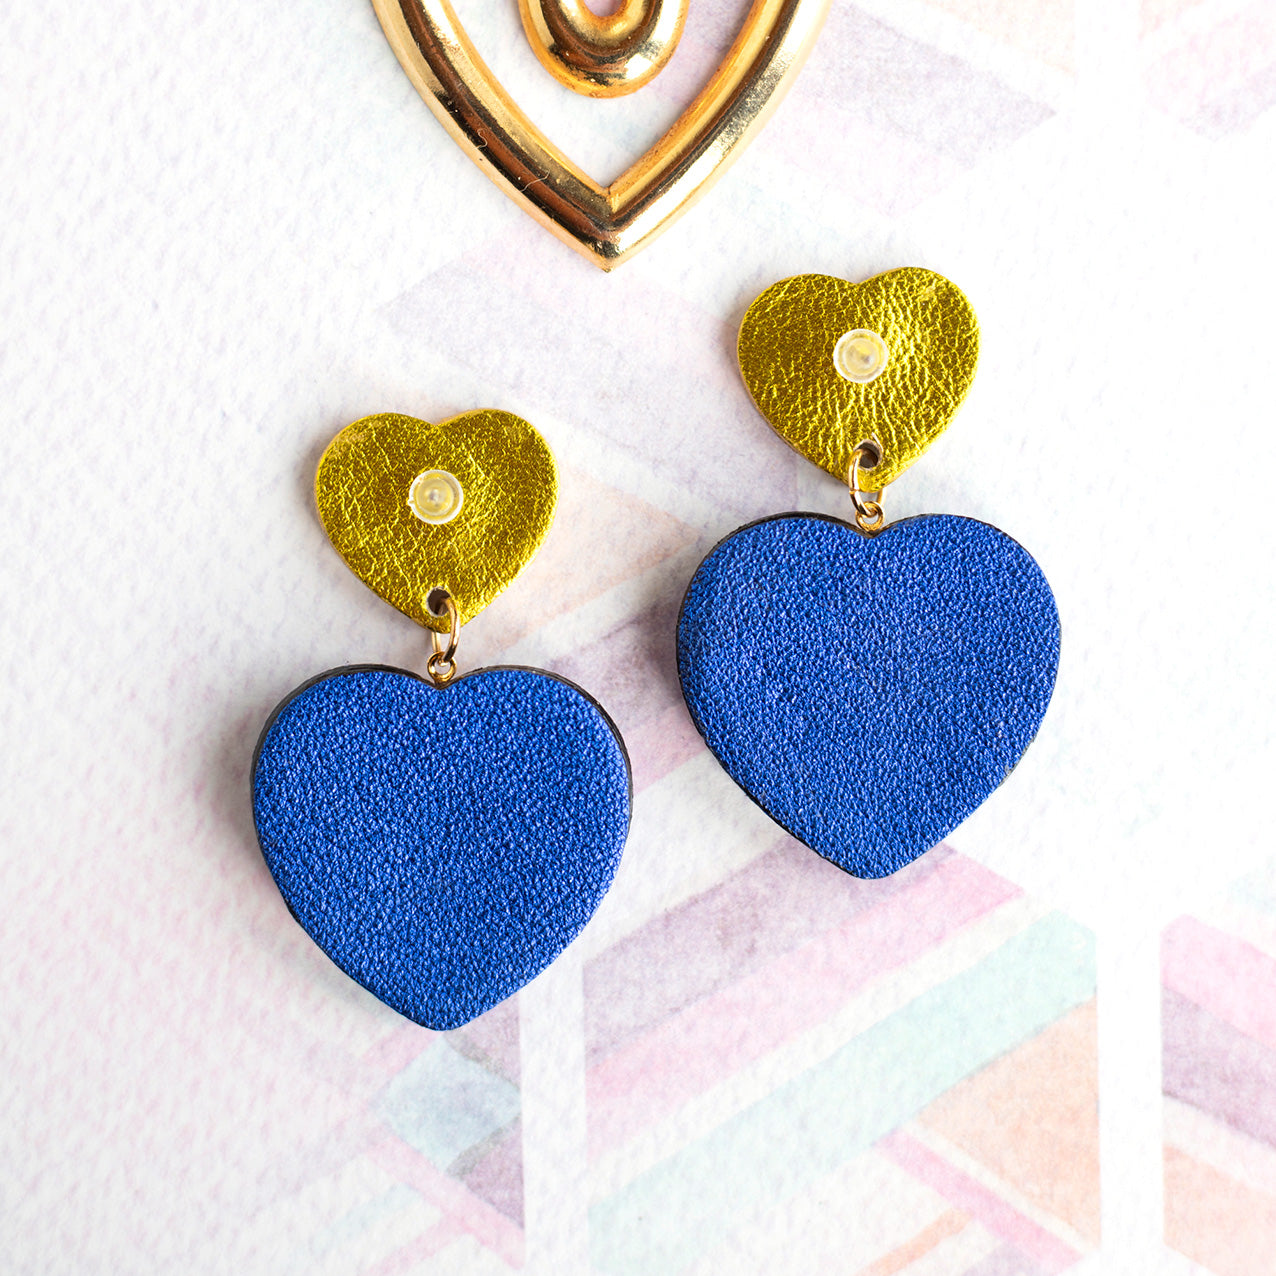 Sacré Coeur earrings in metallic chartreuse and ultramarine blue leather